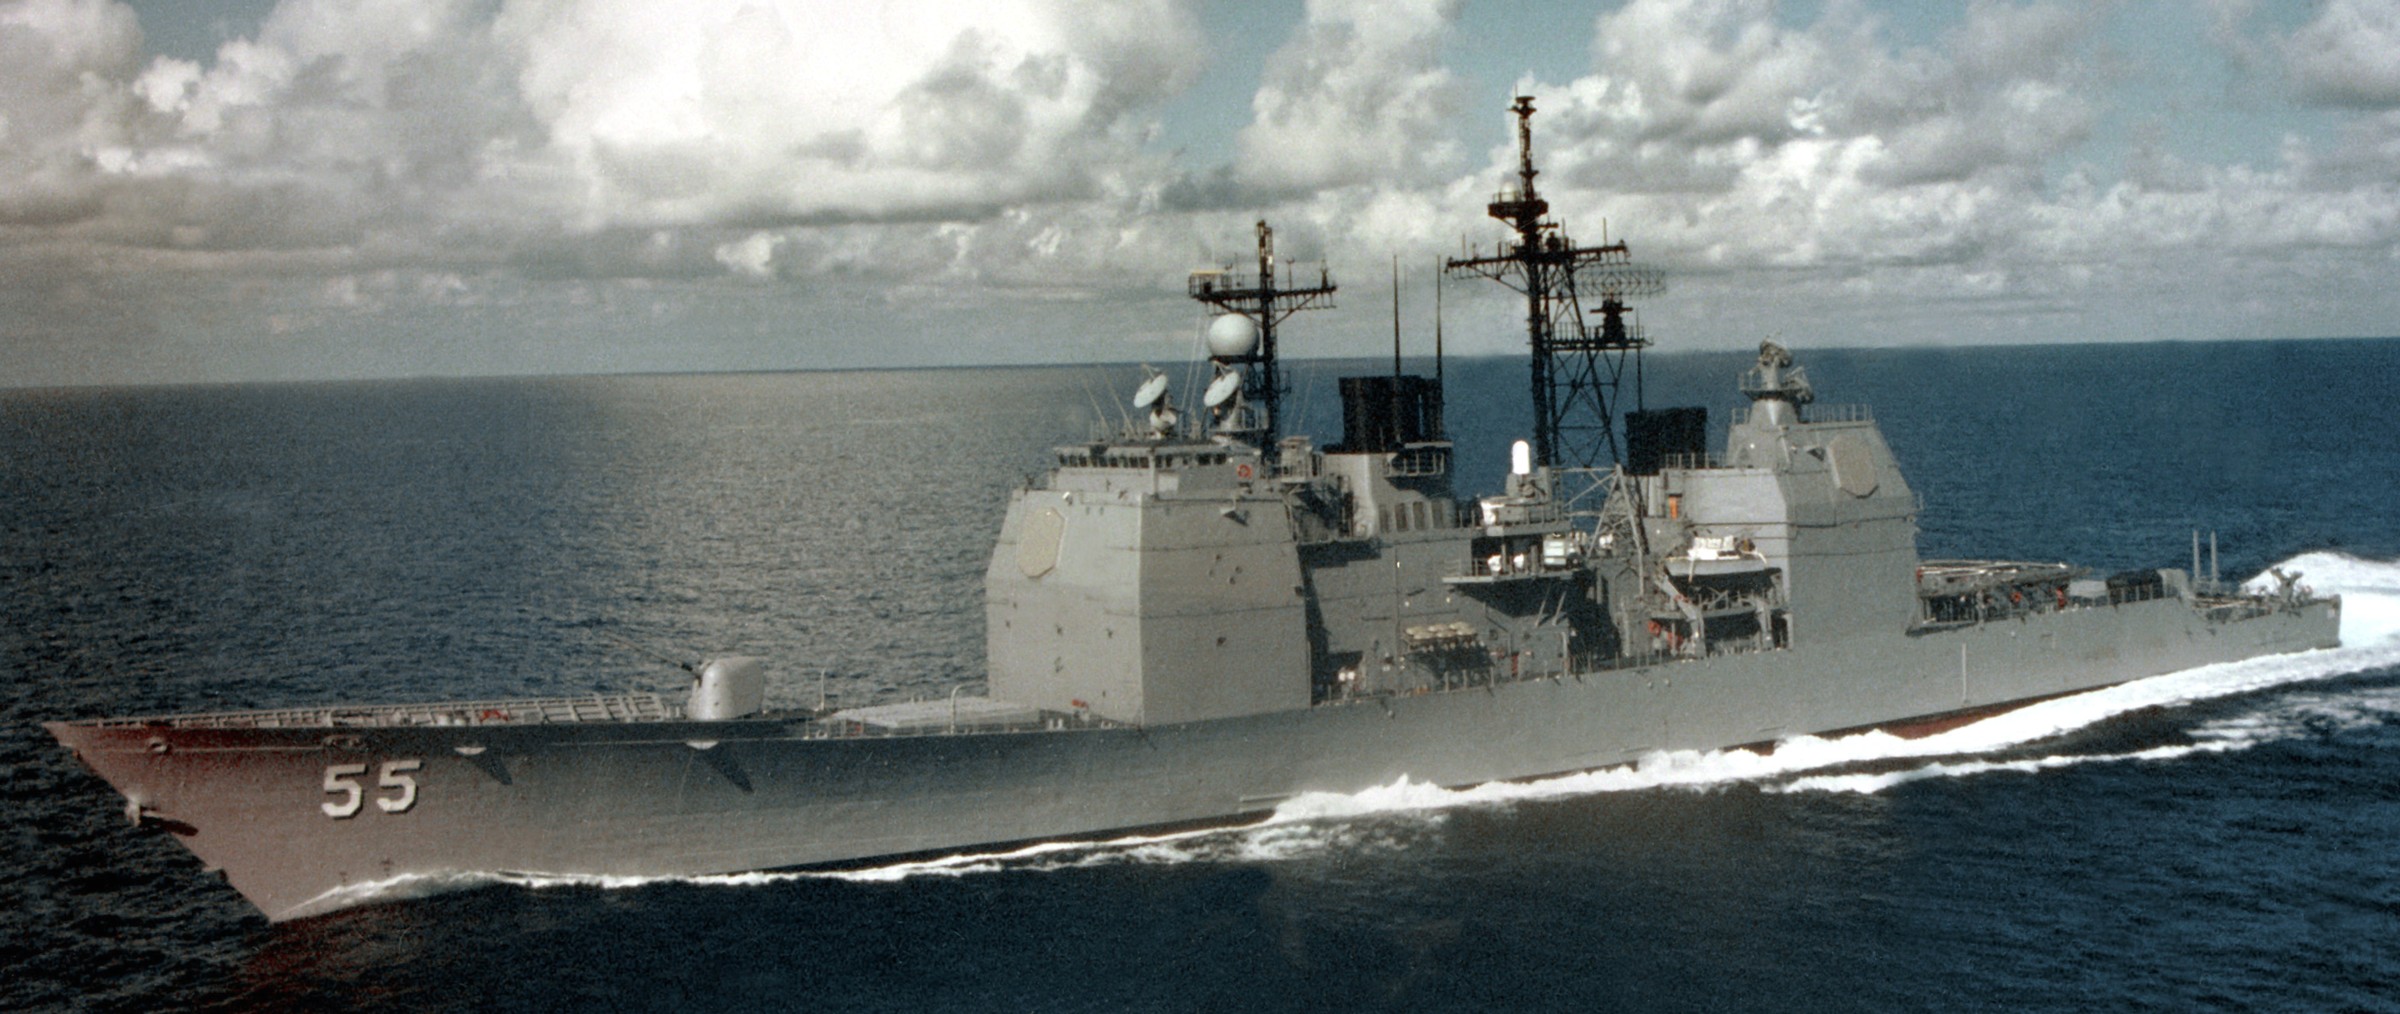 cg-55 uss leyte gulf ticonderoga class guided missile cruiser aegis us navy 12